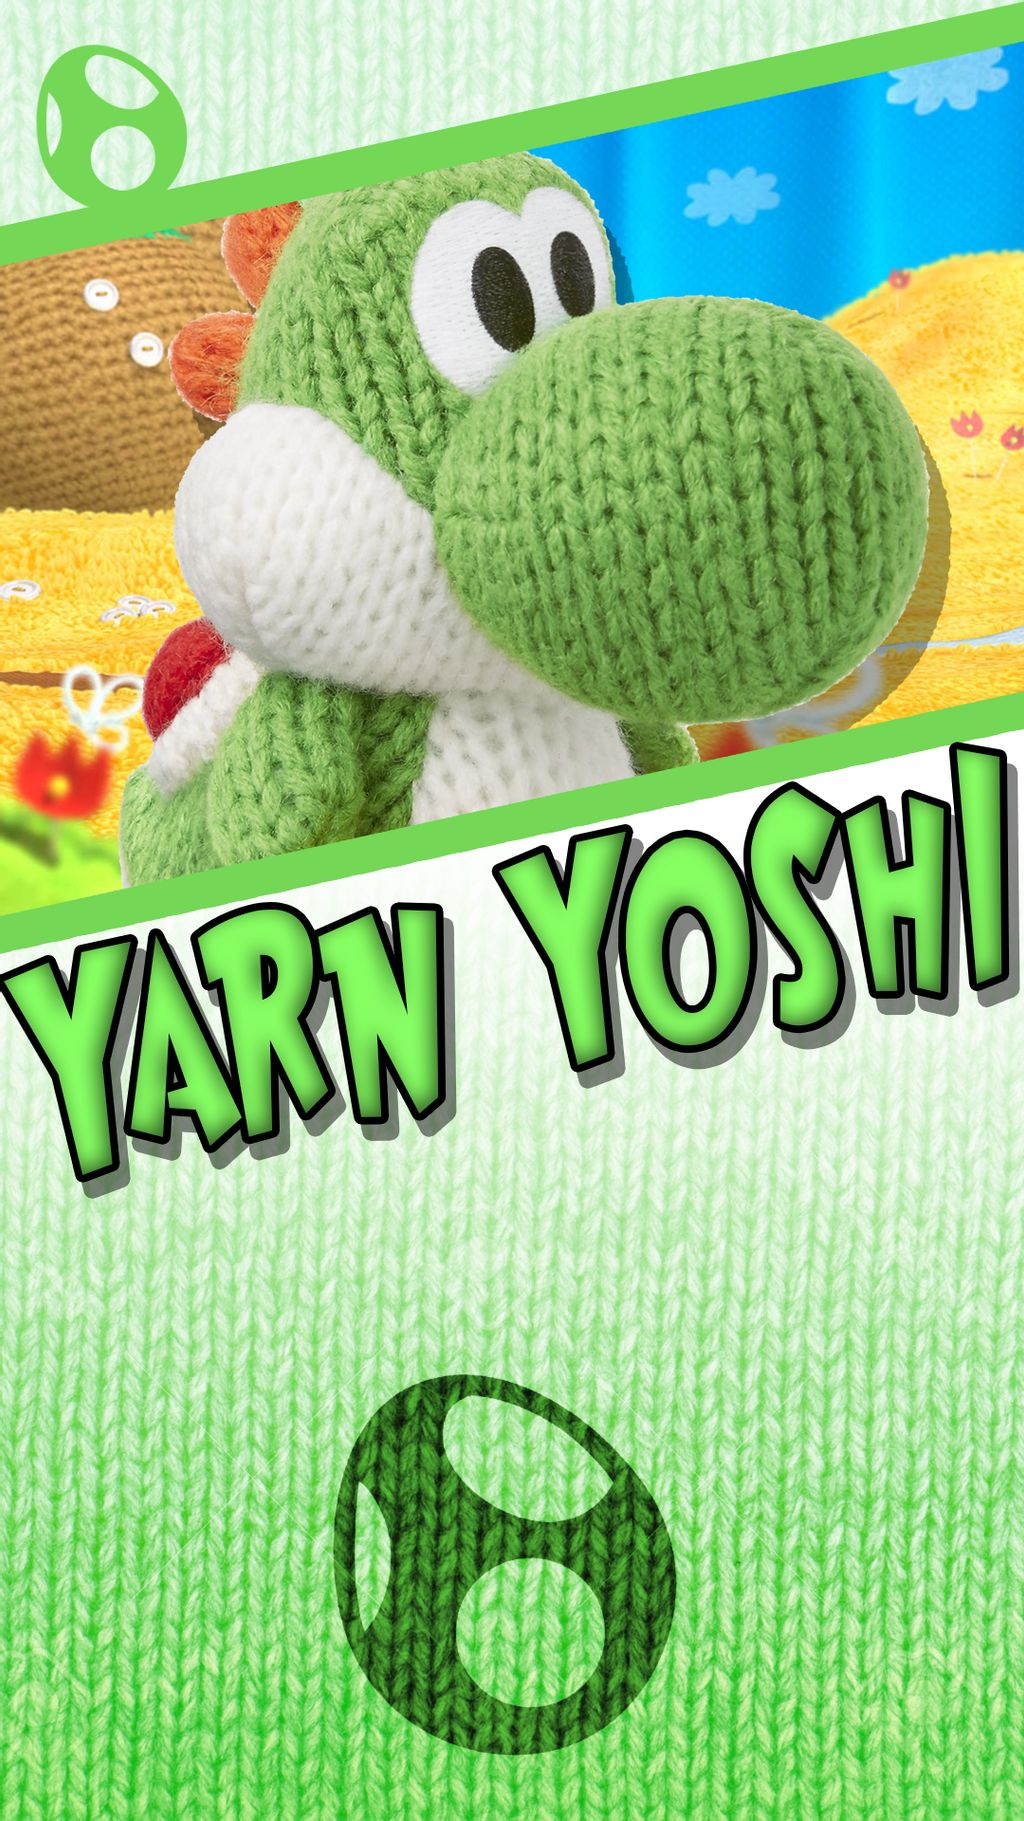 Yarn Yoshi Woolly World Phone Wallpaper By Mrthatkidalex24 On